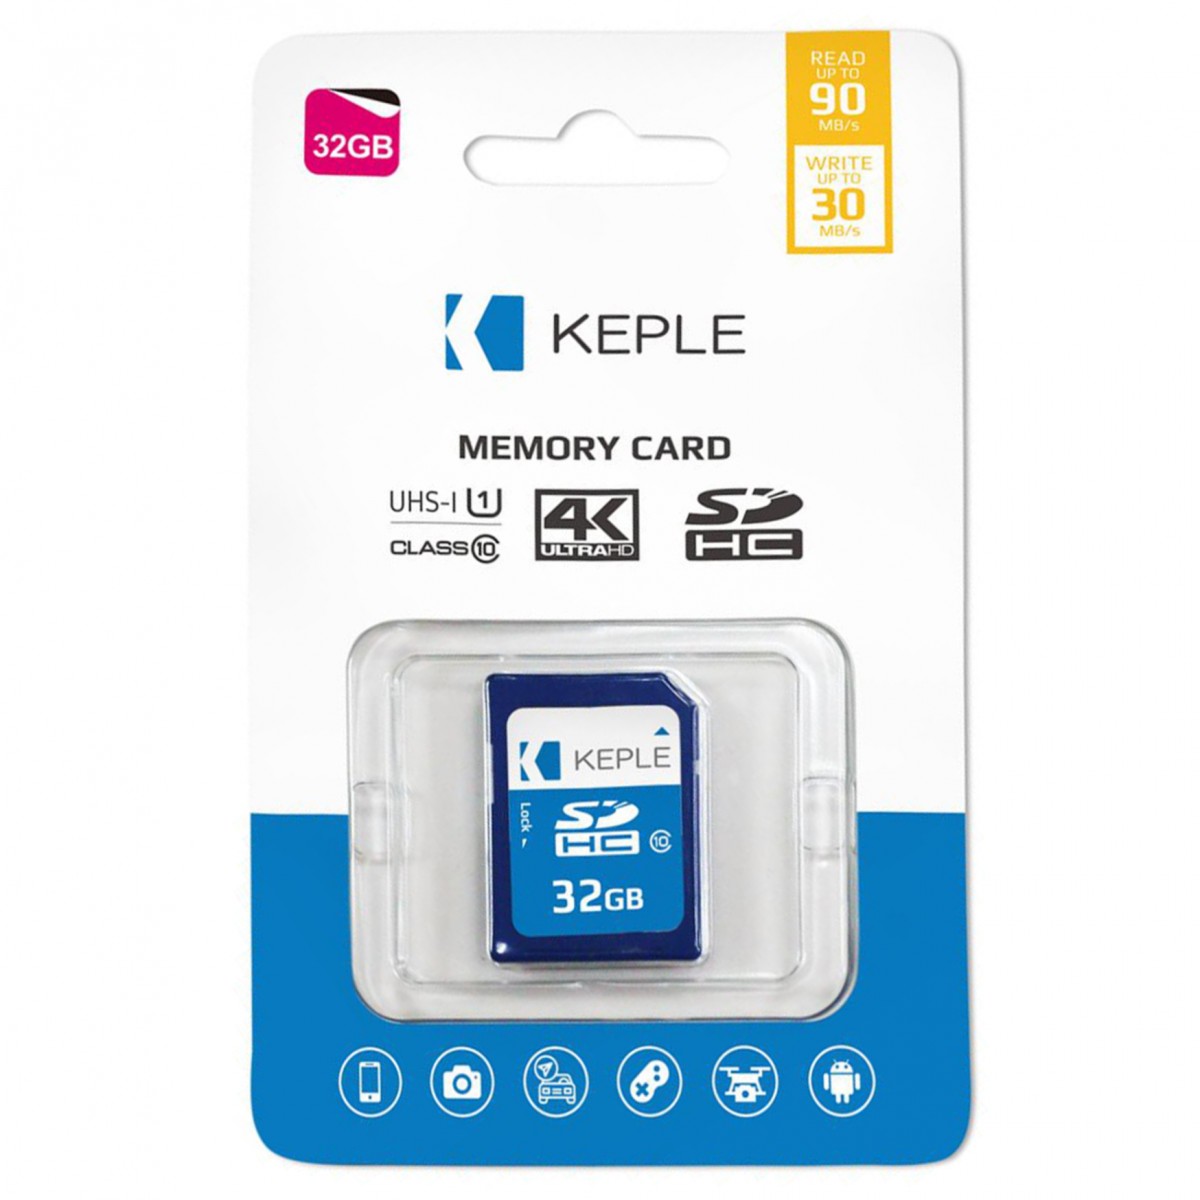 32 GB Storage Class 10 UHS-1 U1 SDHC Card DSC-H300 Keple 32GB SD Speicherkarte High Speed SD Speicher Karte Kompatibel mit Sony Cyber Shot DSC-HX400V DSC-H400 DSLR Camera DSC-HX400V 